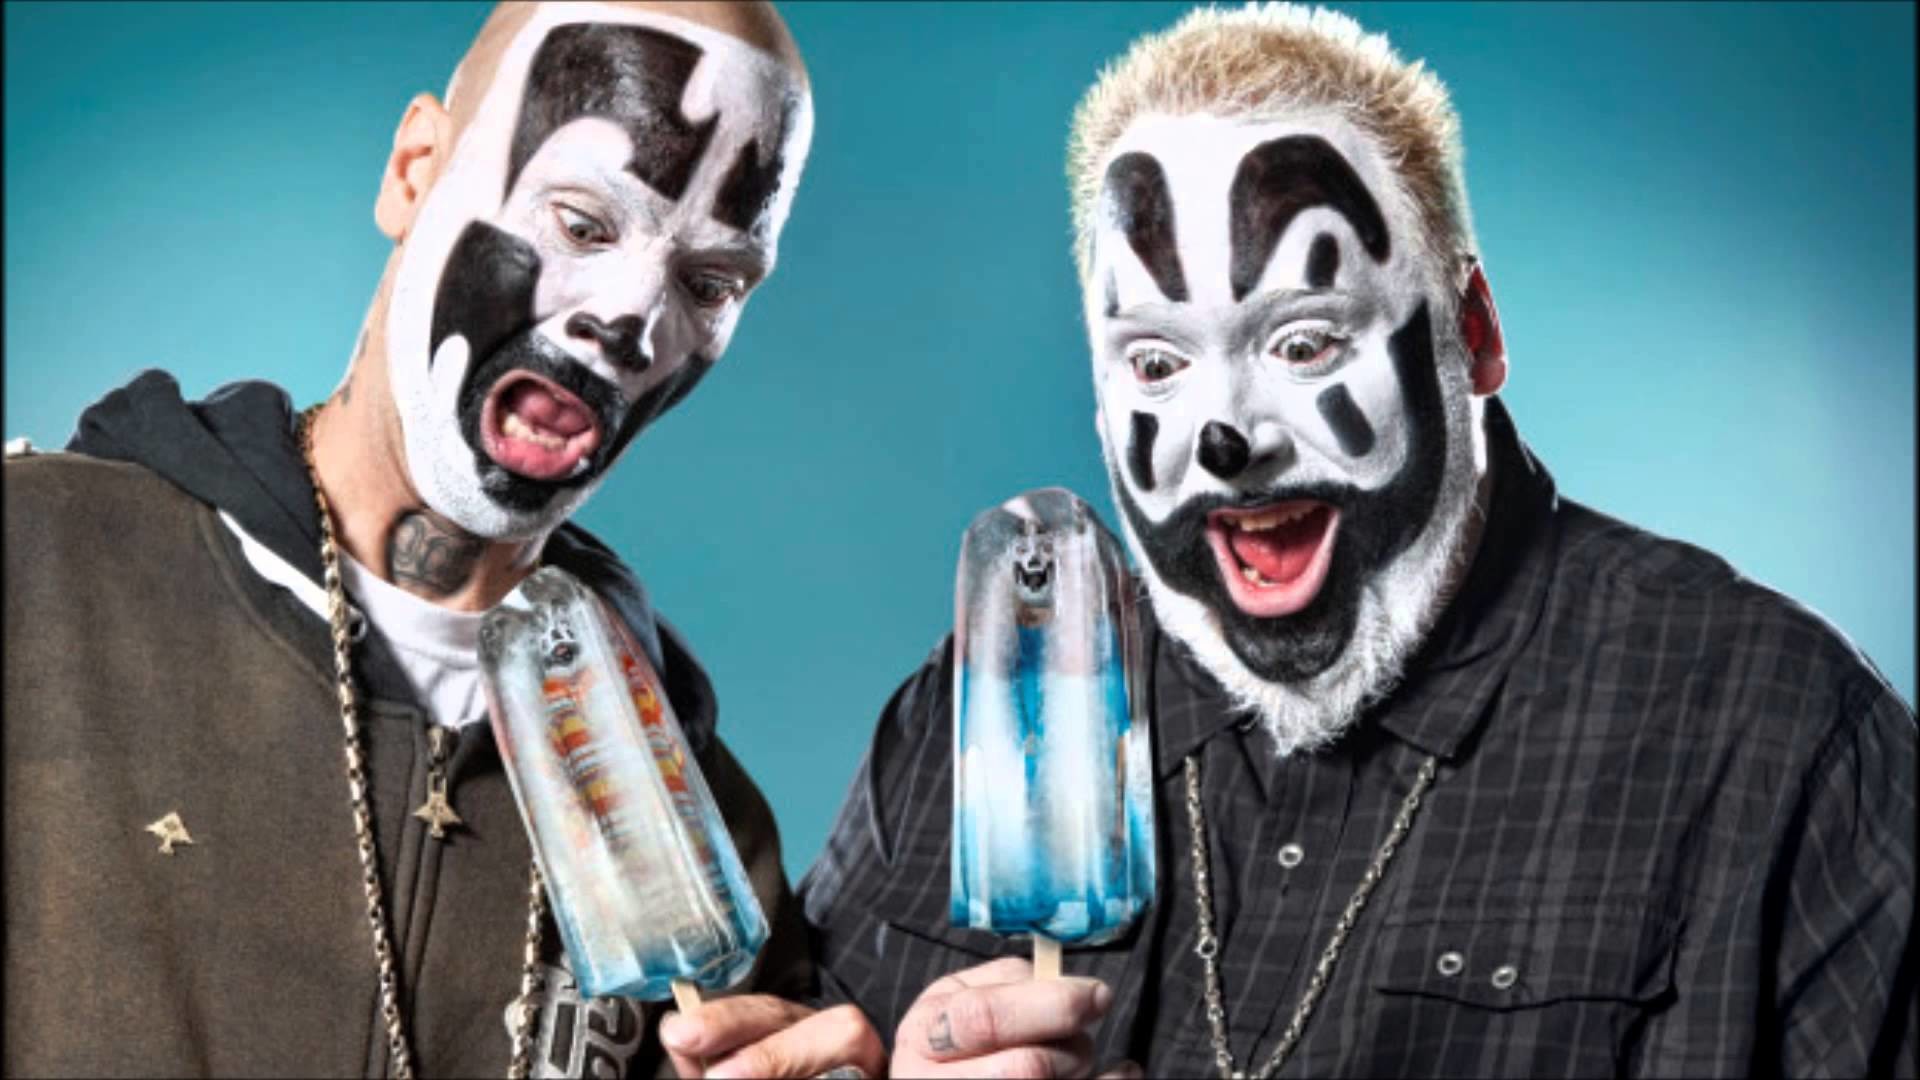 1920x1080 Insane Clown Posse interview with Shaggy 2 Dope: Shockfest, Killjoy Club,  Gathering of the Juggalos - YouTube